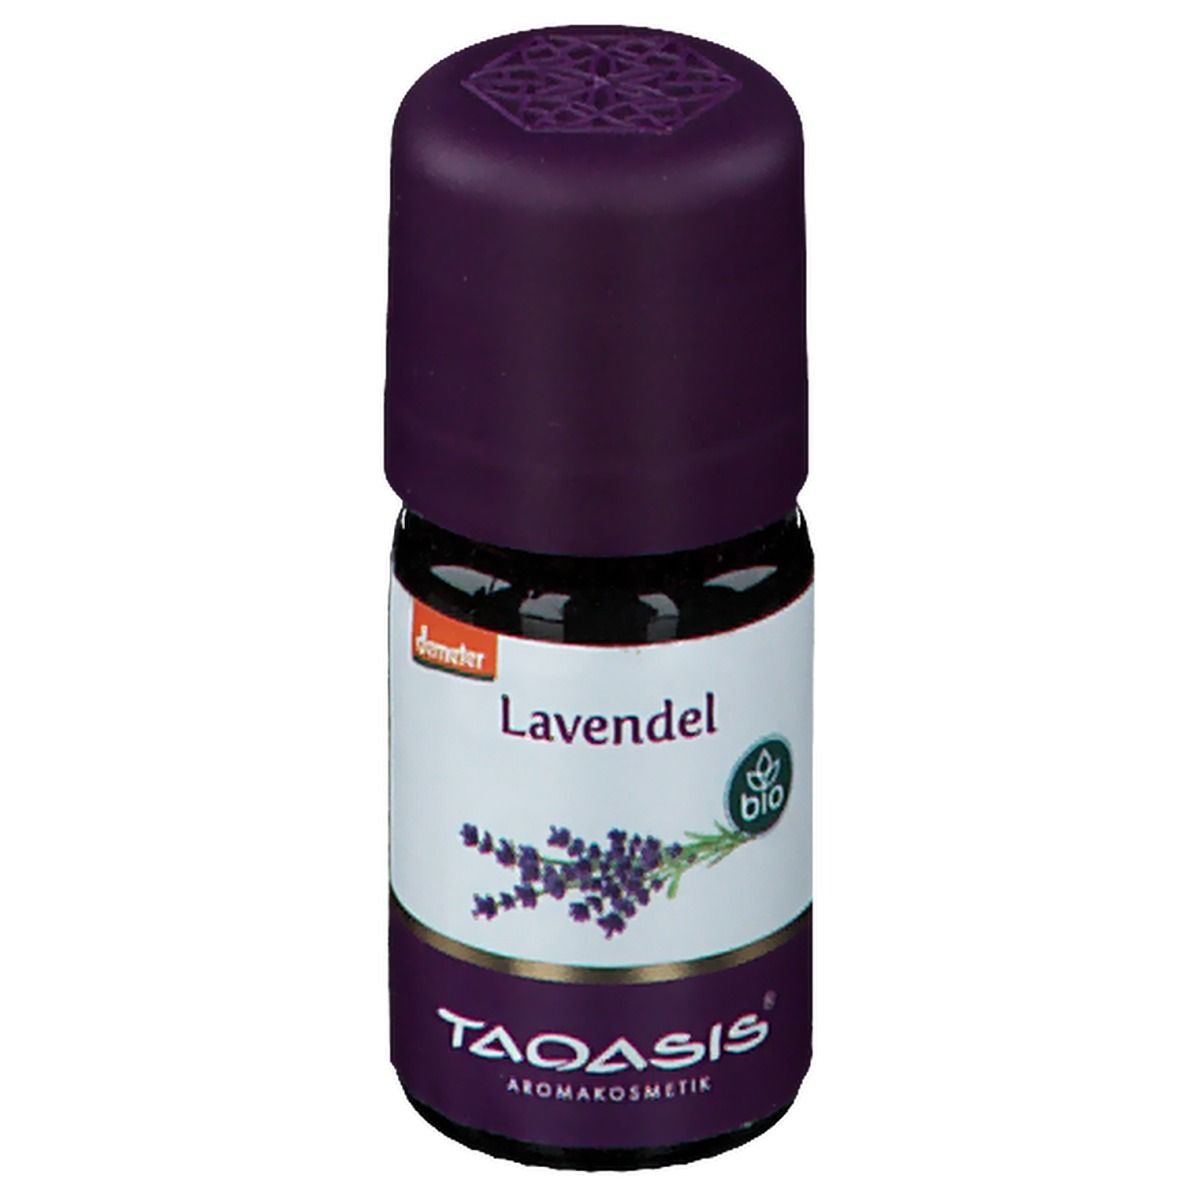 Taoasis® Lavendel fein BIO Öl